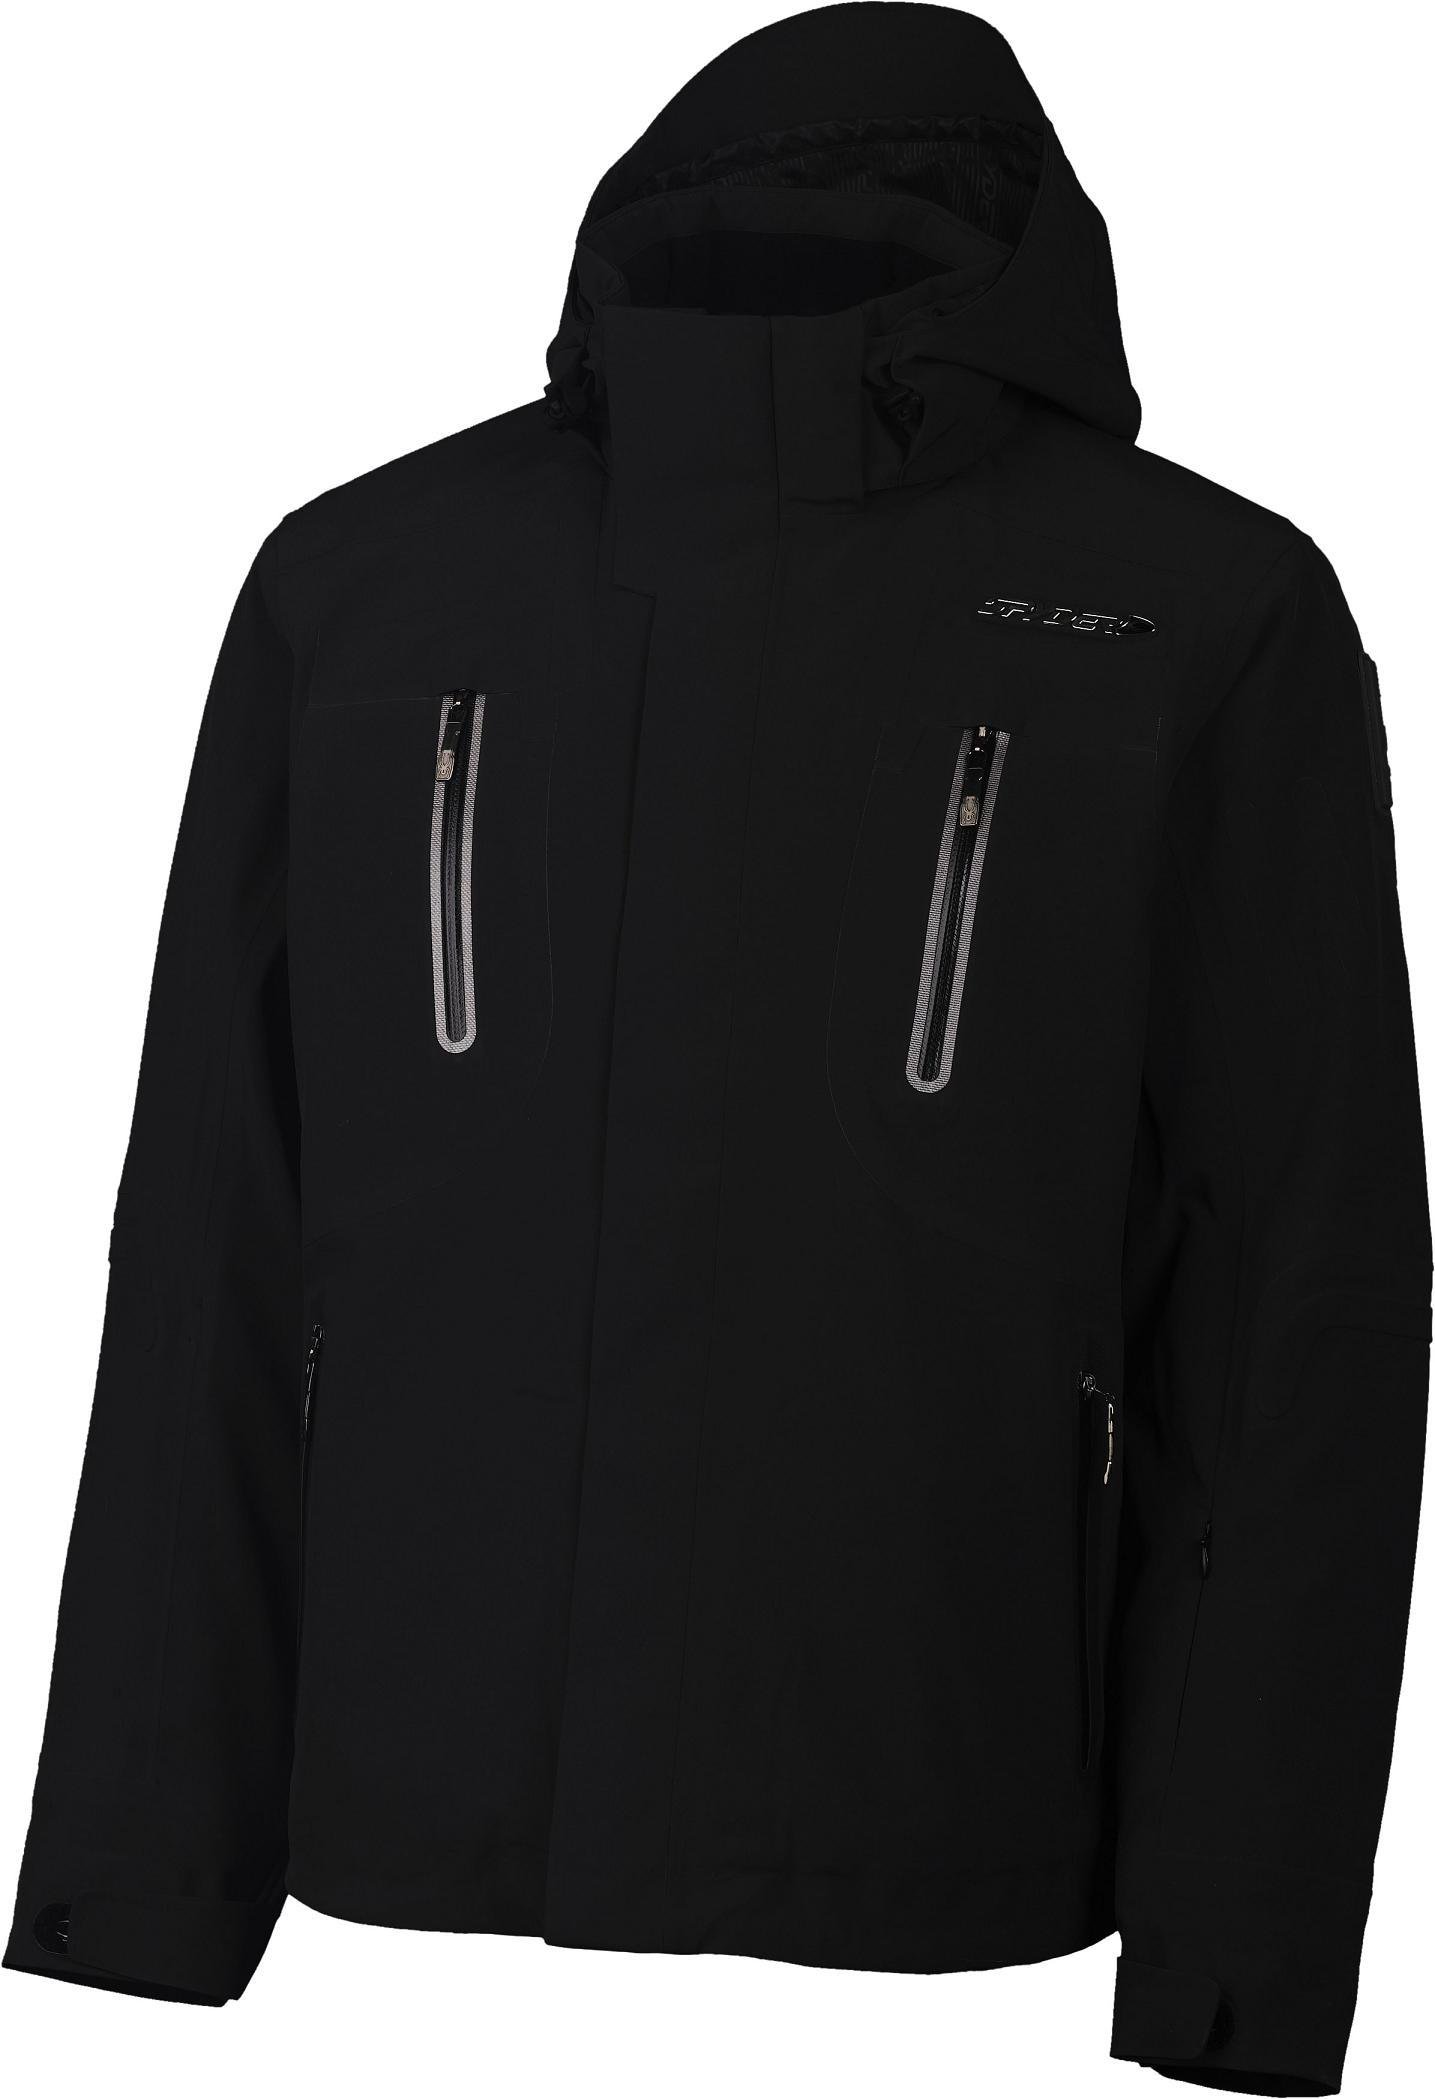 Spyder Monterosa Jacket